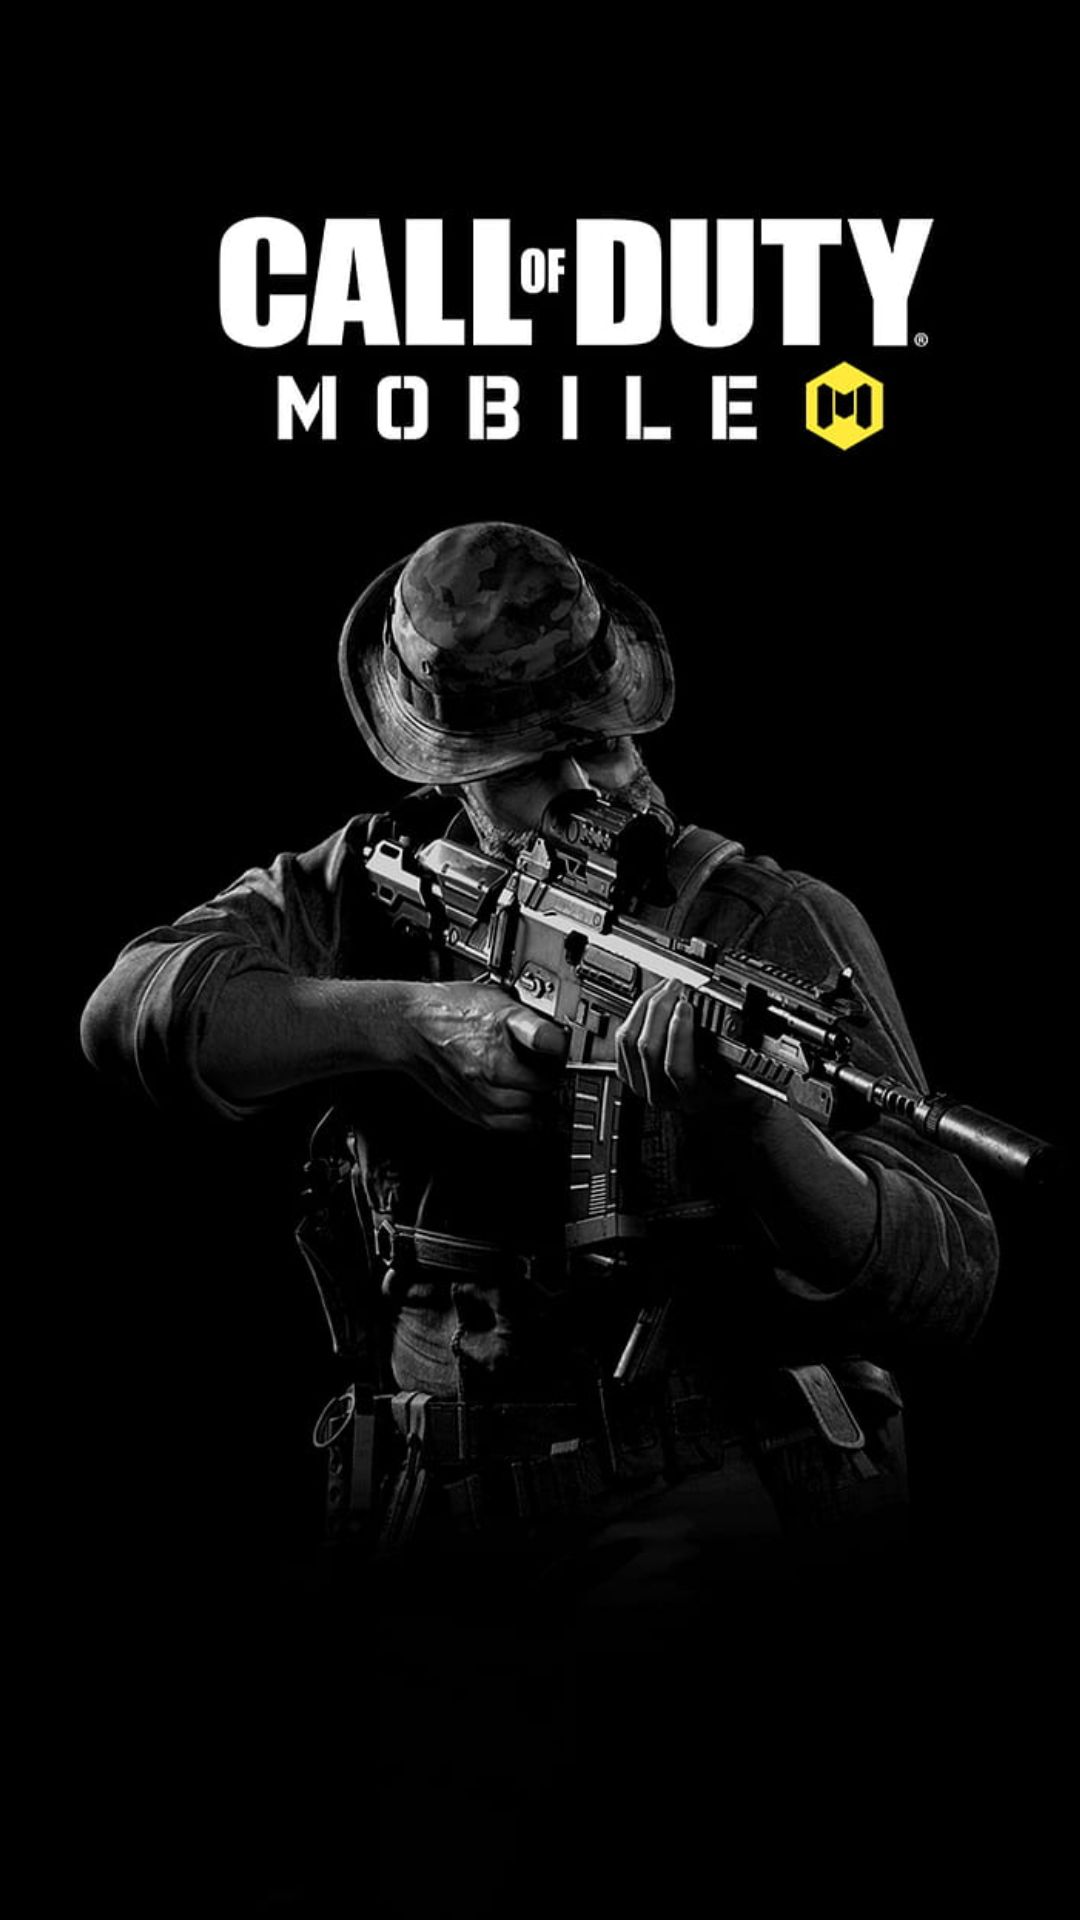 Call of Duty Mobile Season 8 Poster 4K Ultra HD Mobile Wallpaper